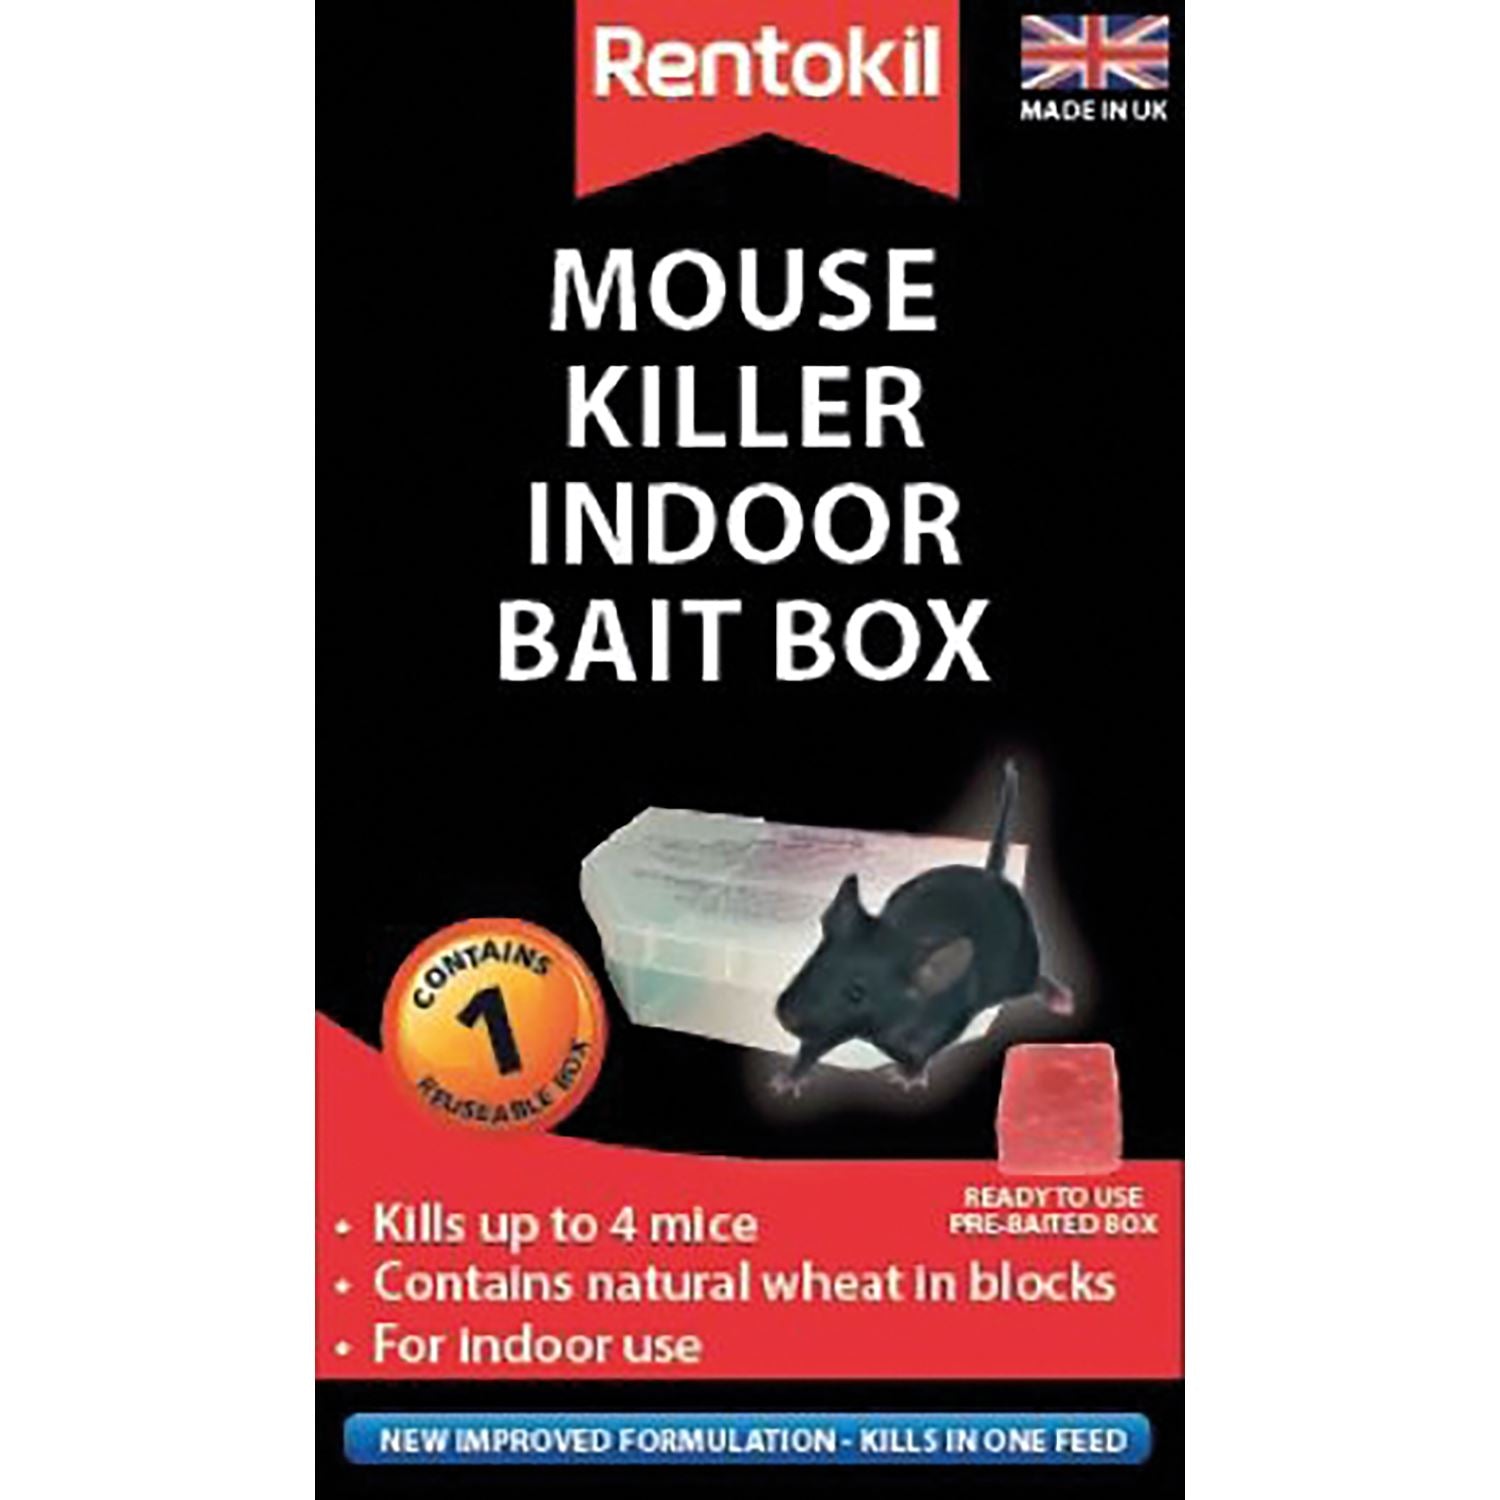 Rentokil Mouse Killer Indoor Bait Box - Just Horse Riders